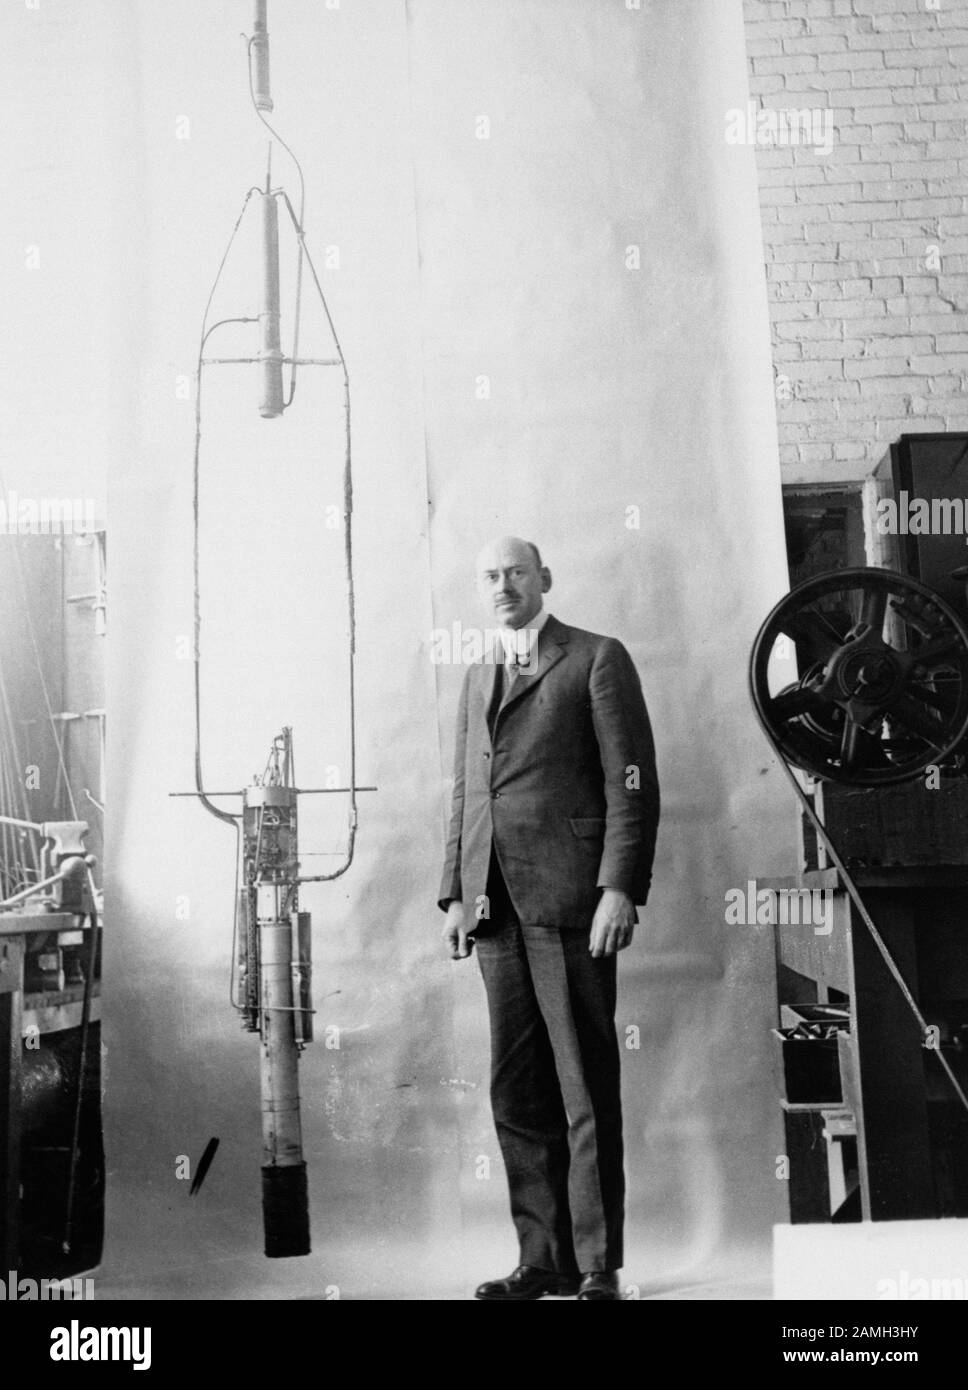 Robert Hutchings Goddard, ingeniero estadounidense, profesor, físico e inventor, se encuentra en su oficina junto a un cohete, 1820. Imagen cortesía de NASA. () Foto de stock